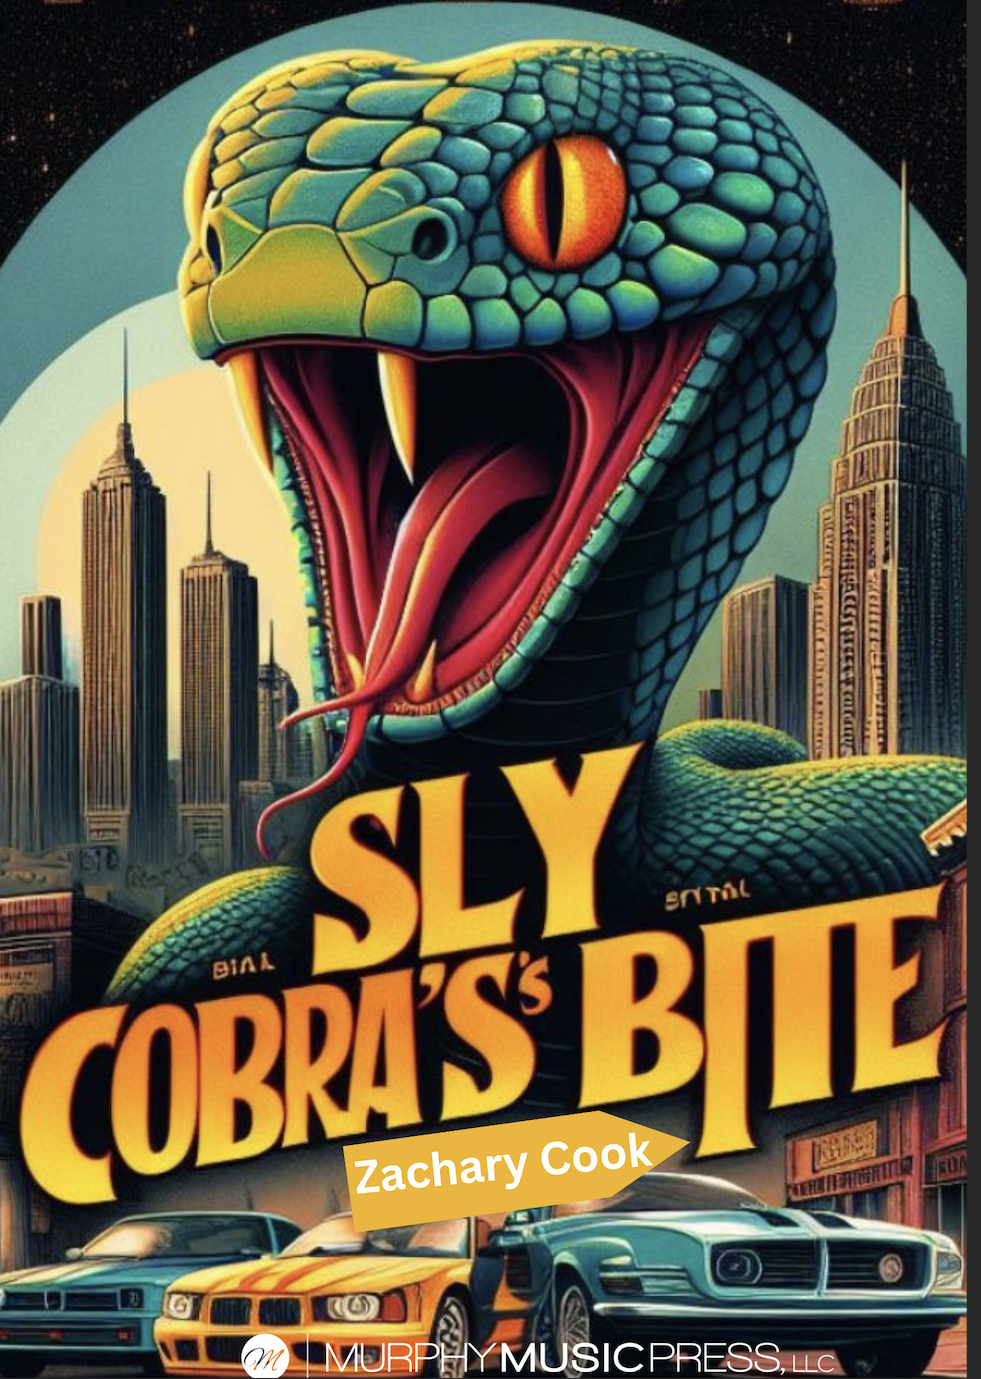 A Sly Cobra's Bite by Zachary Cook